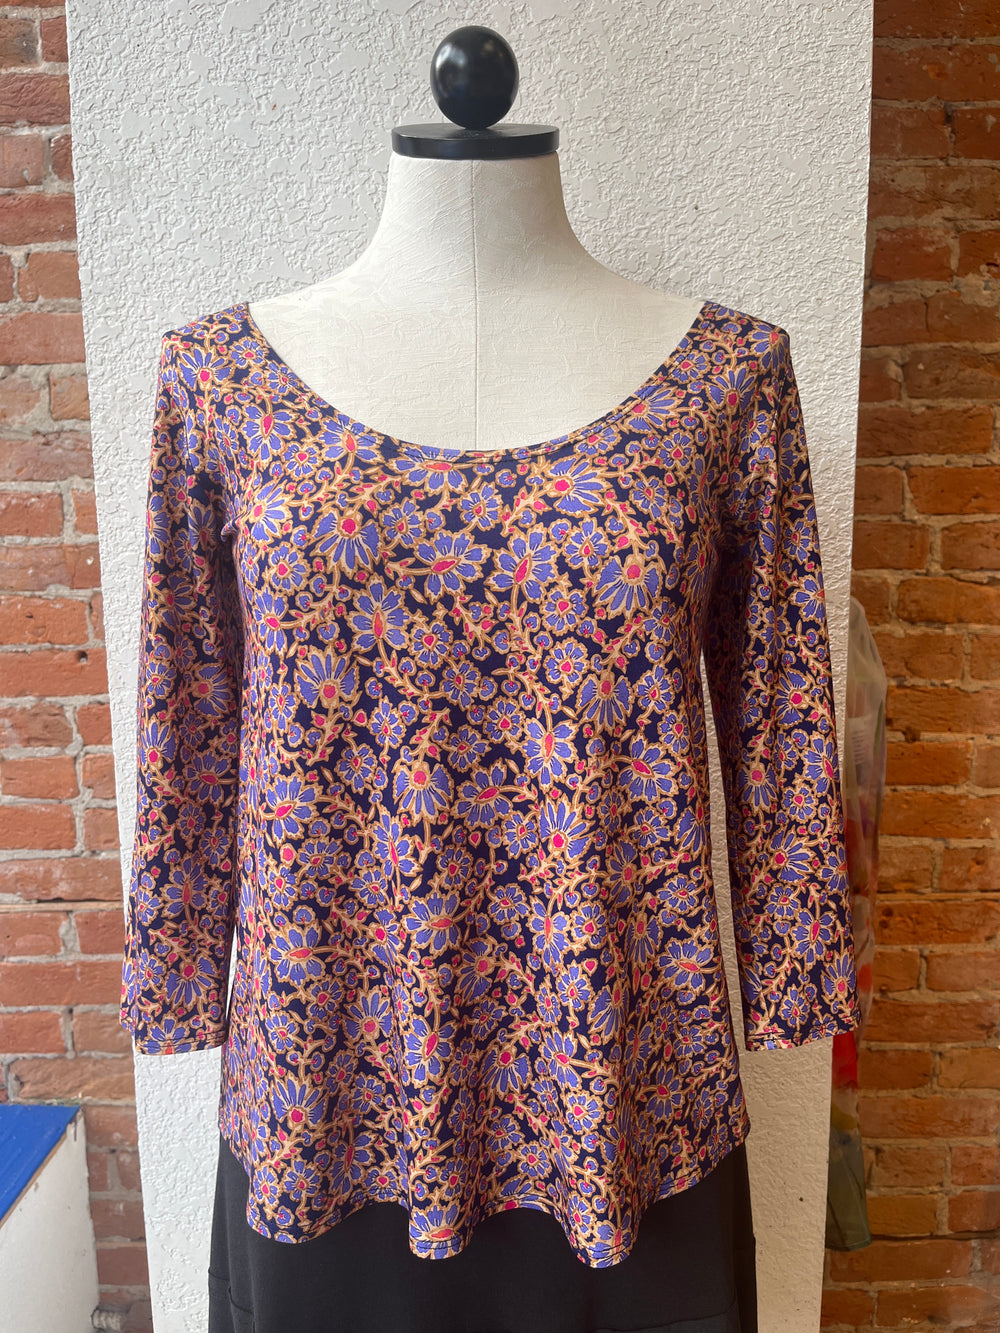 Salaam Cora shirt, 3/4 sleeve purple floral print